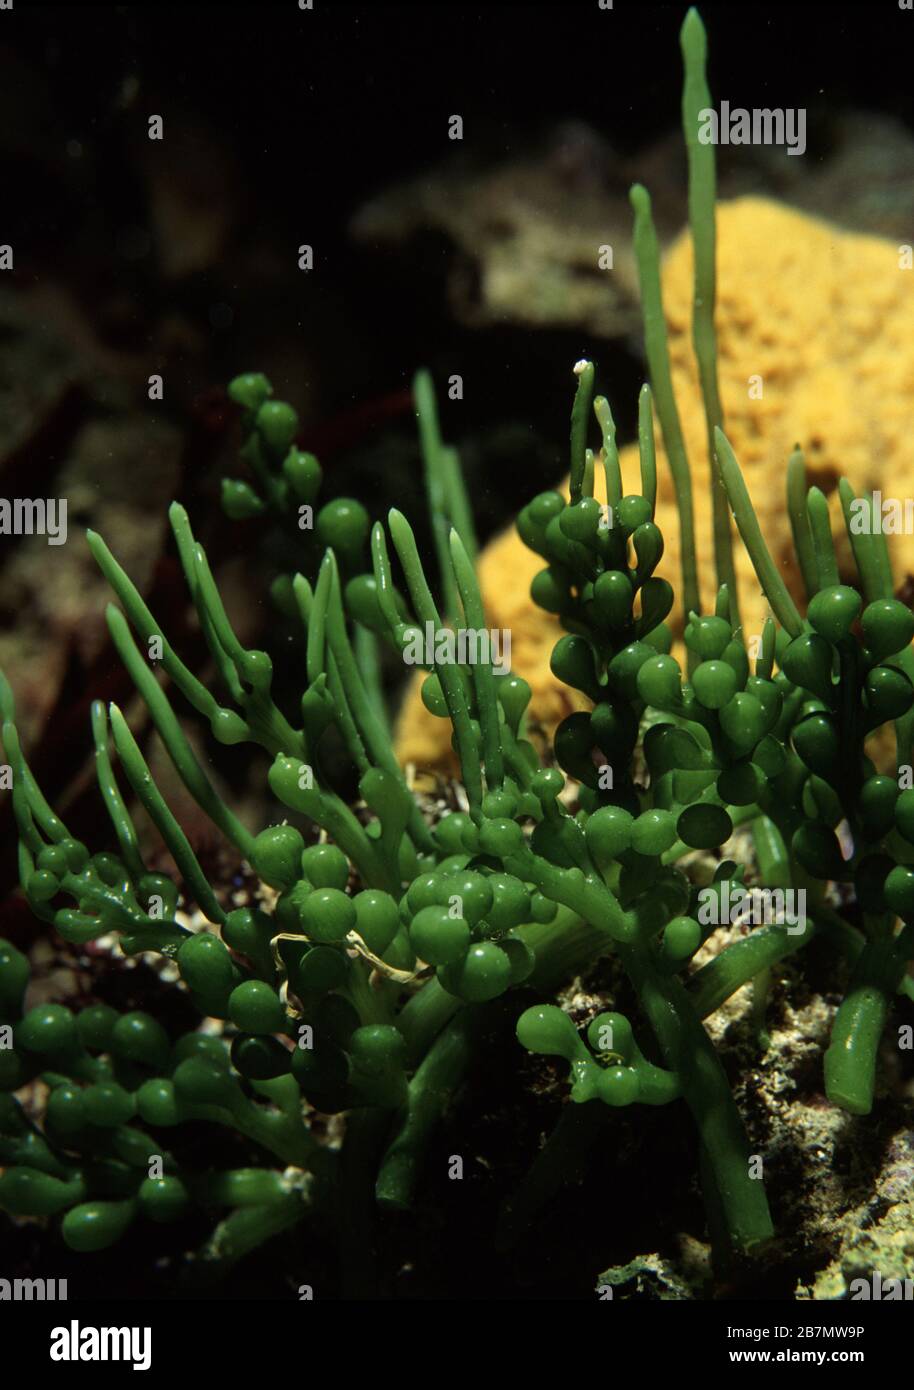 Phototropism (growth) in Grape seaweed, Caulerpa racemosa Stock Photo